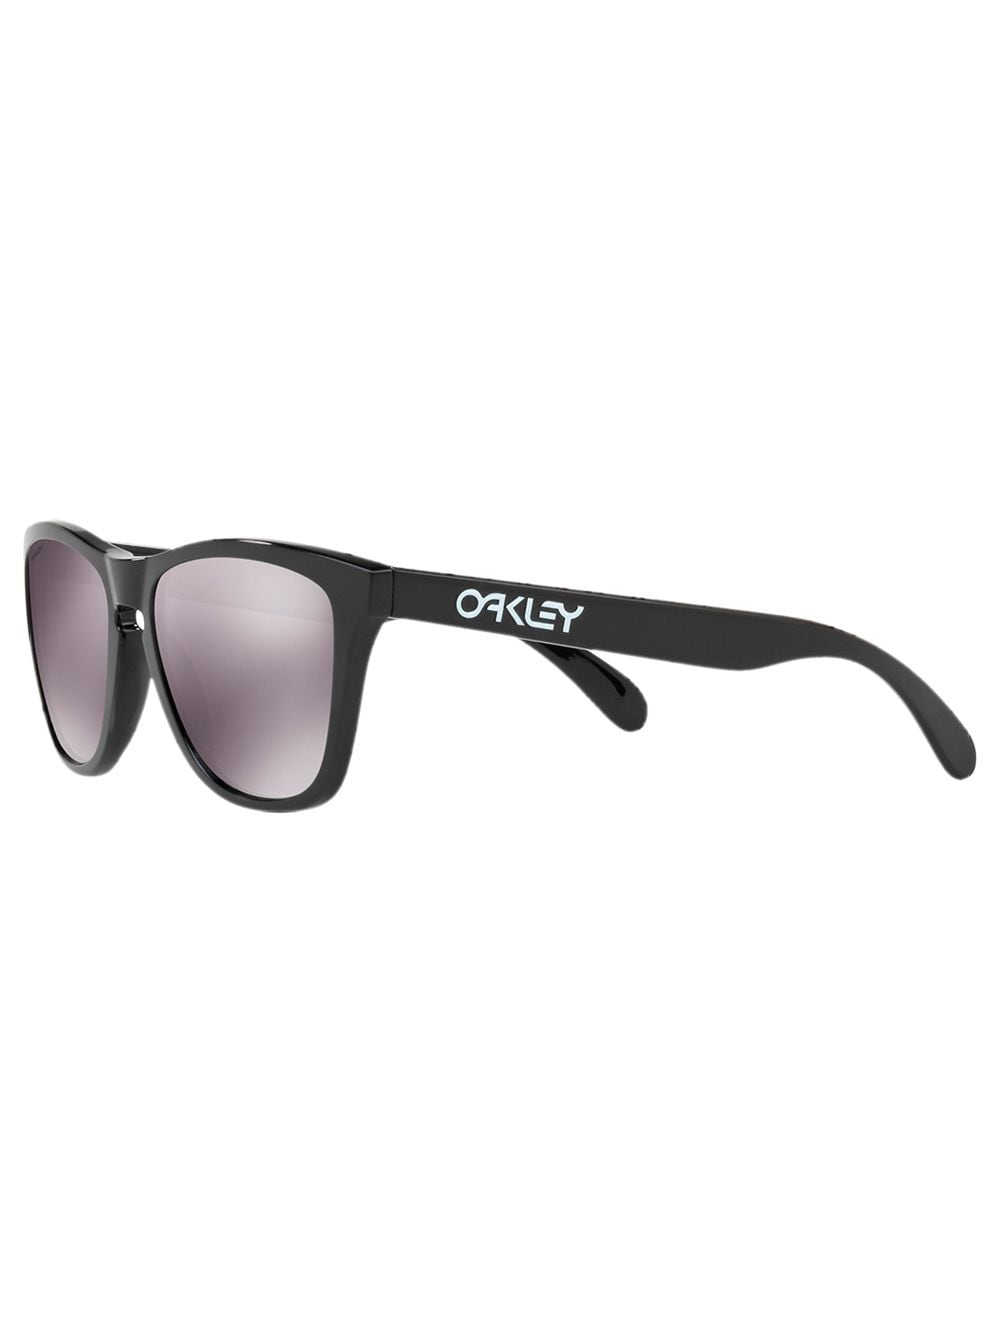 Oakley Frogskins zonnebril - Zwart